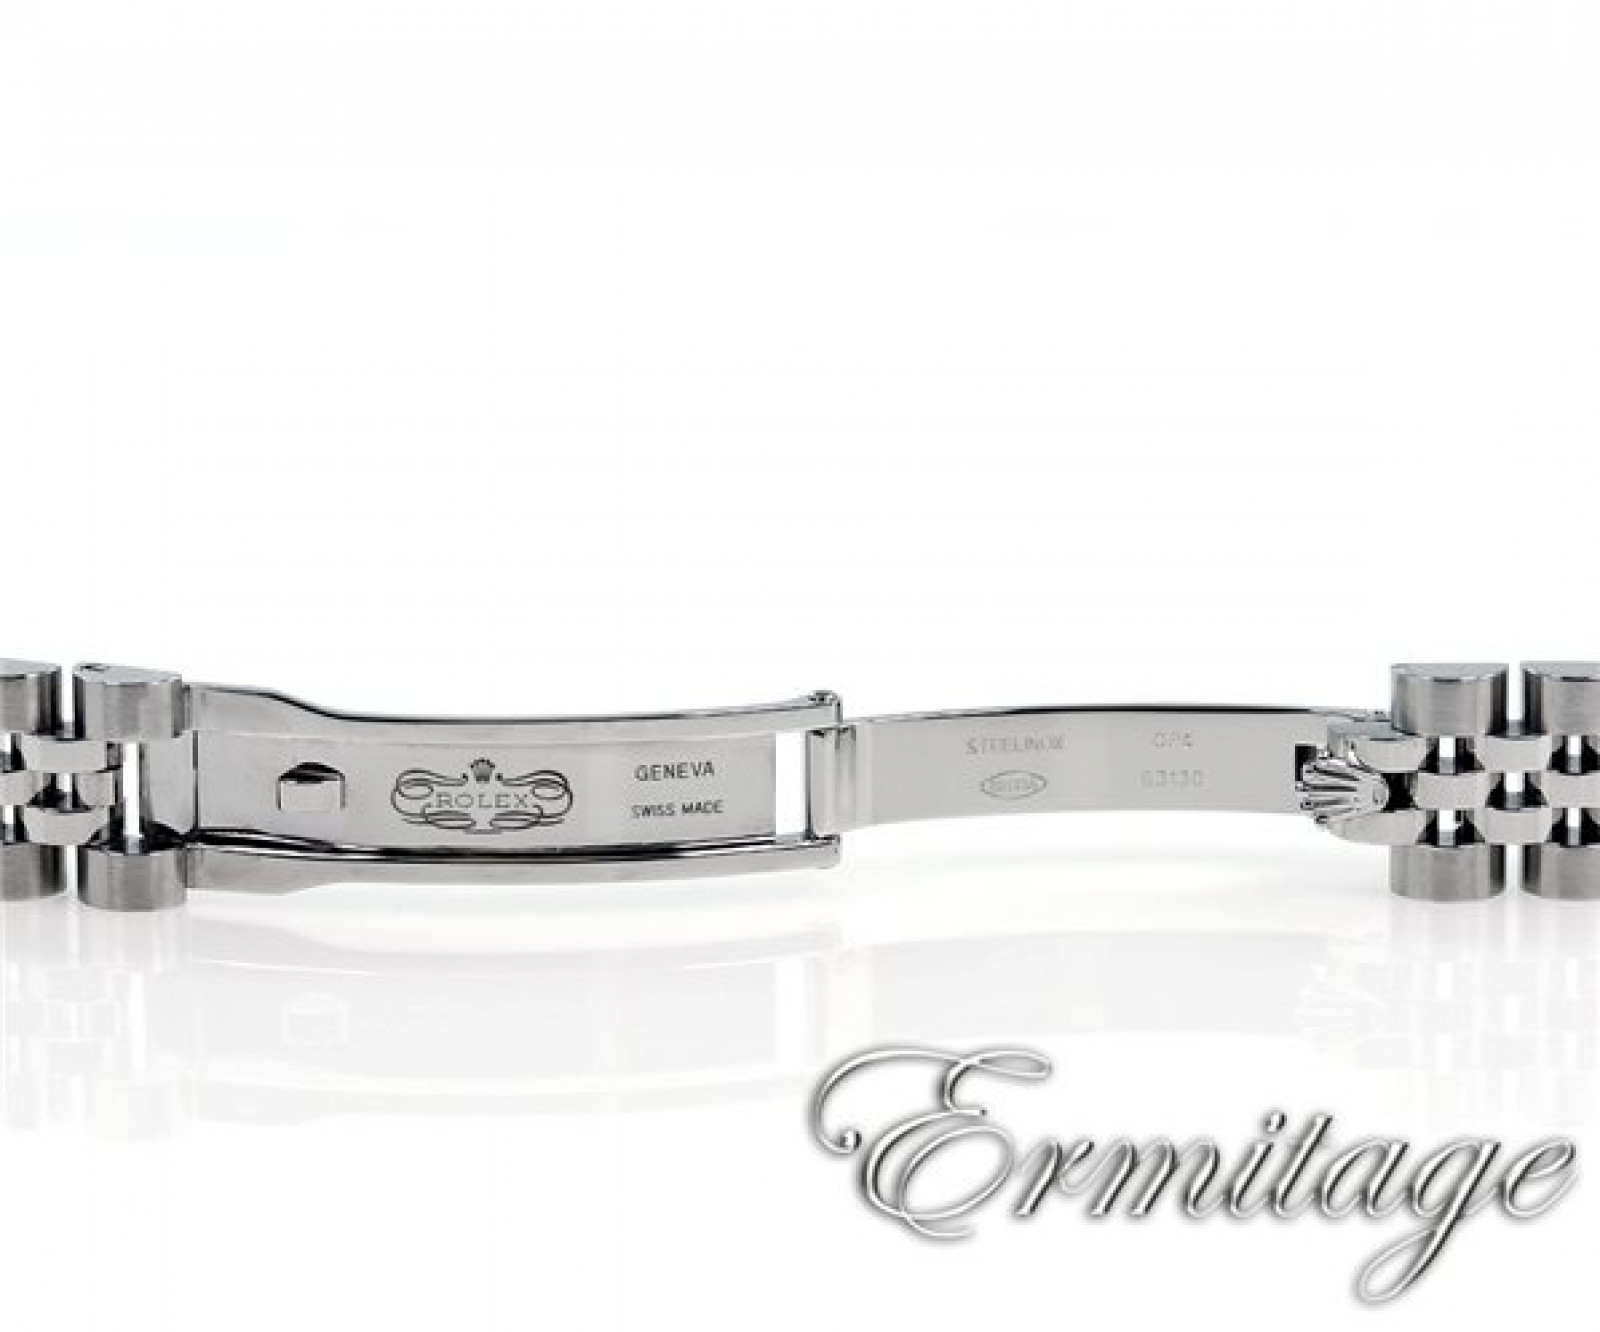 Ladies Rolex Datejust 179160 with Jubilee Bracelet